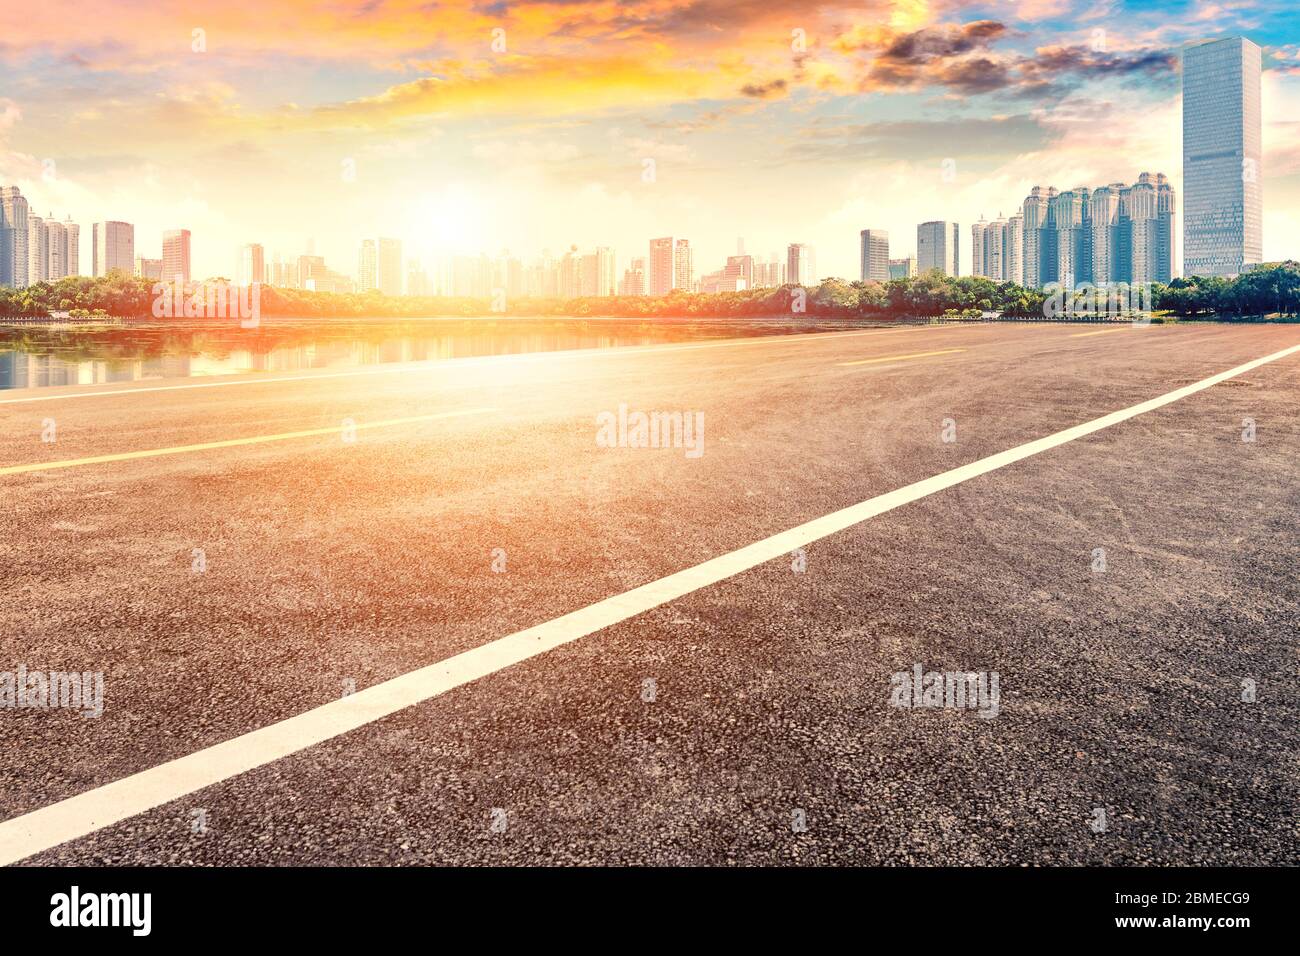 Sunset landscape of empty asphalt road and city buildings. Stock Photo